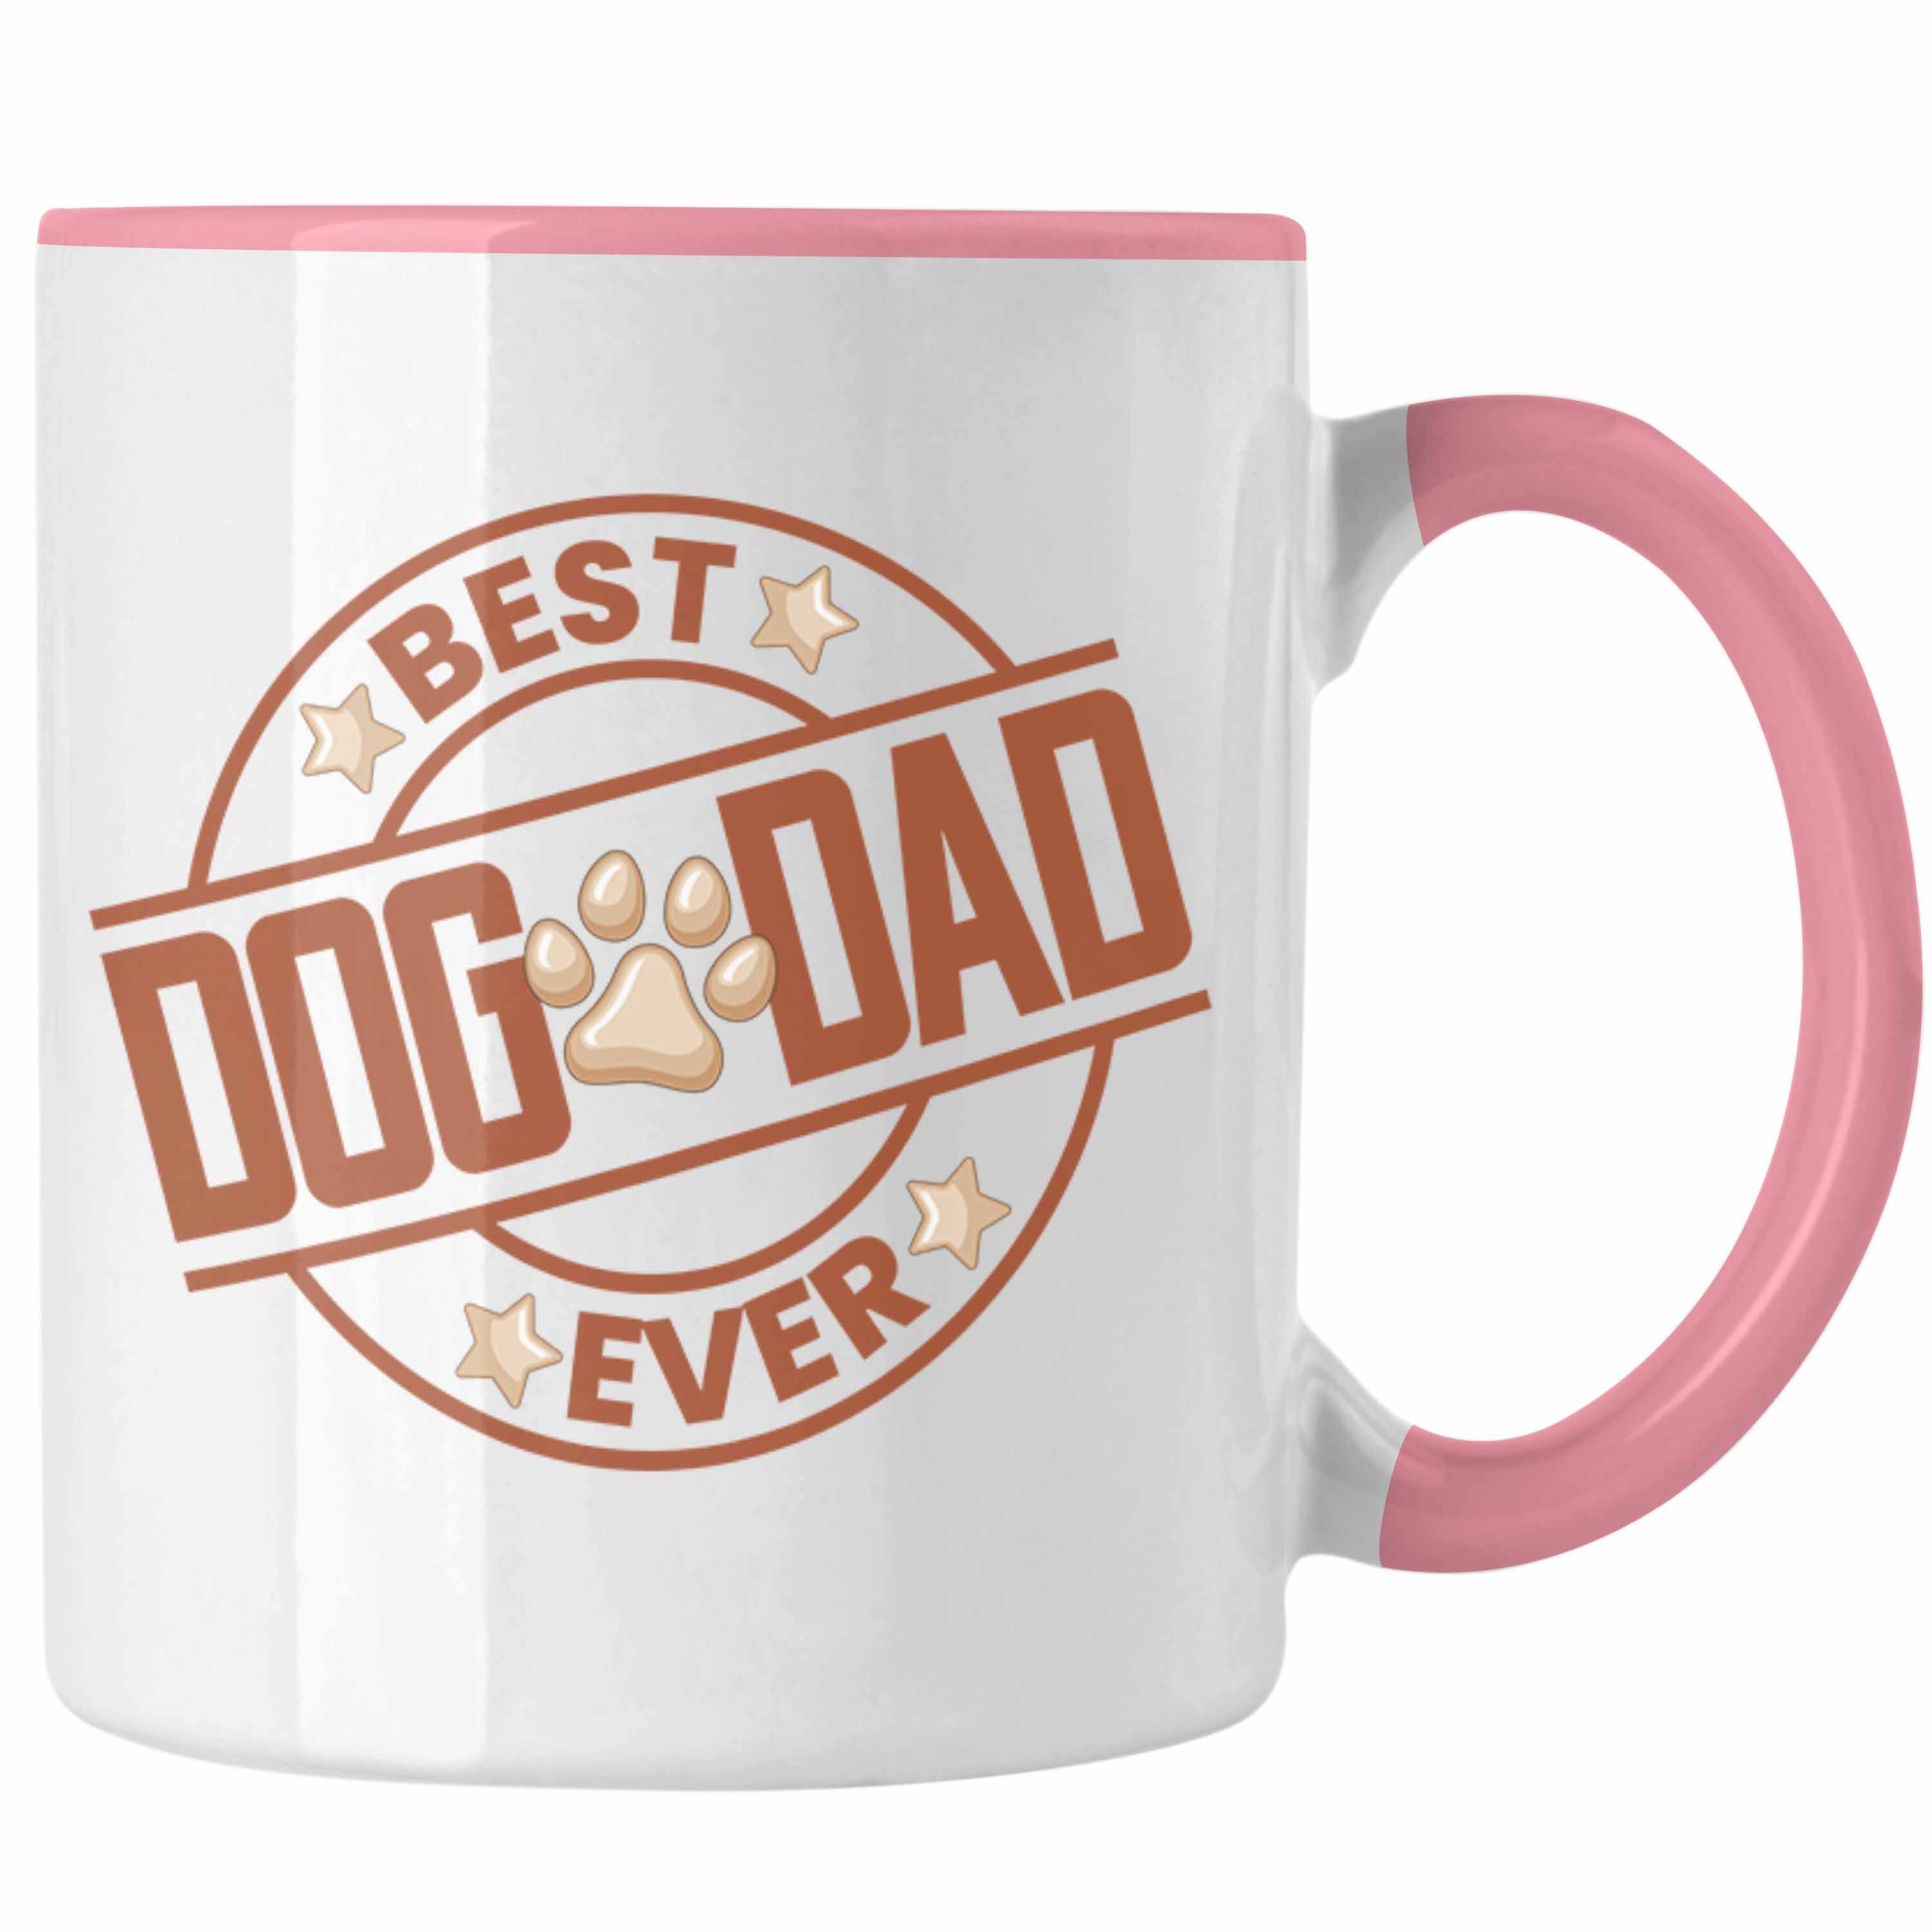 Trendation Tasse Trendation - Bester Hundepapa Ever Tasse Hunde Papa Dog Dad Geschenk Geschenkidee Rosa